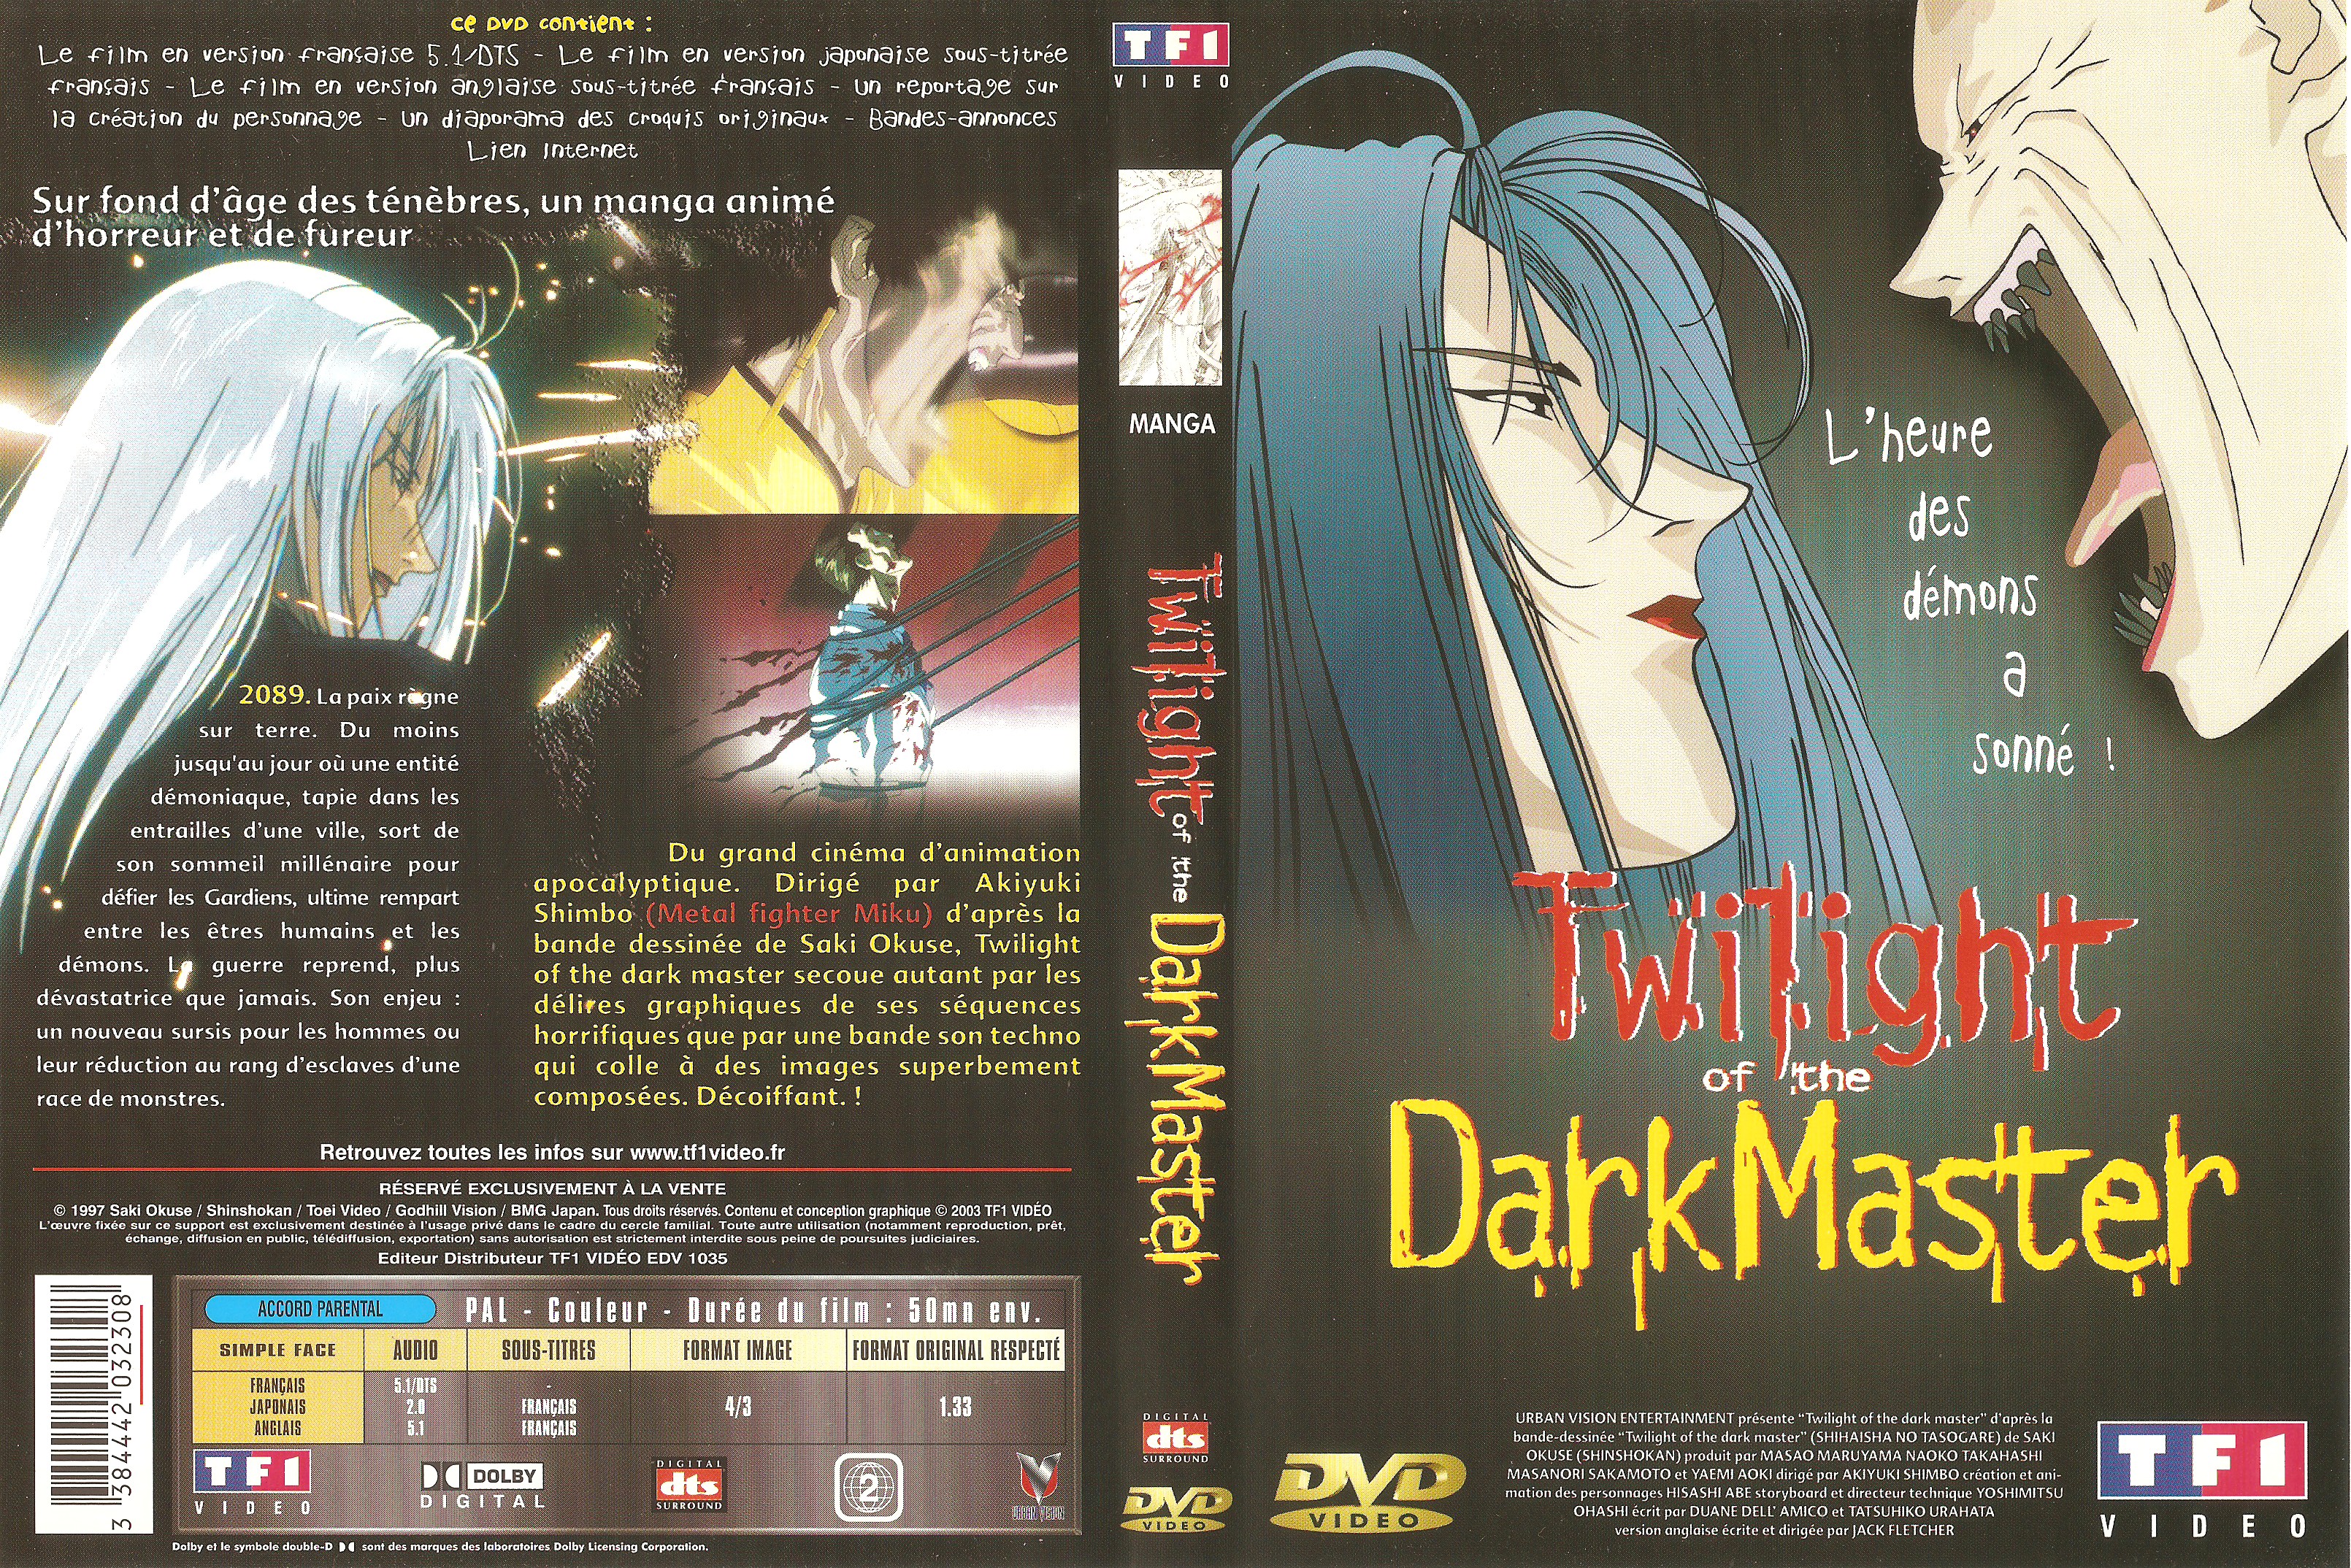 Jaquette DVD Twilight of the Dark Master